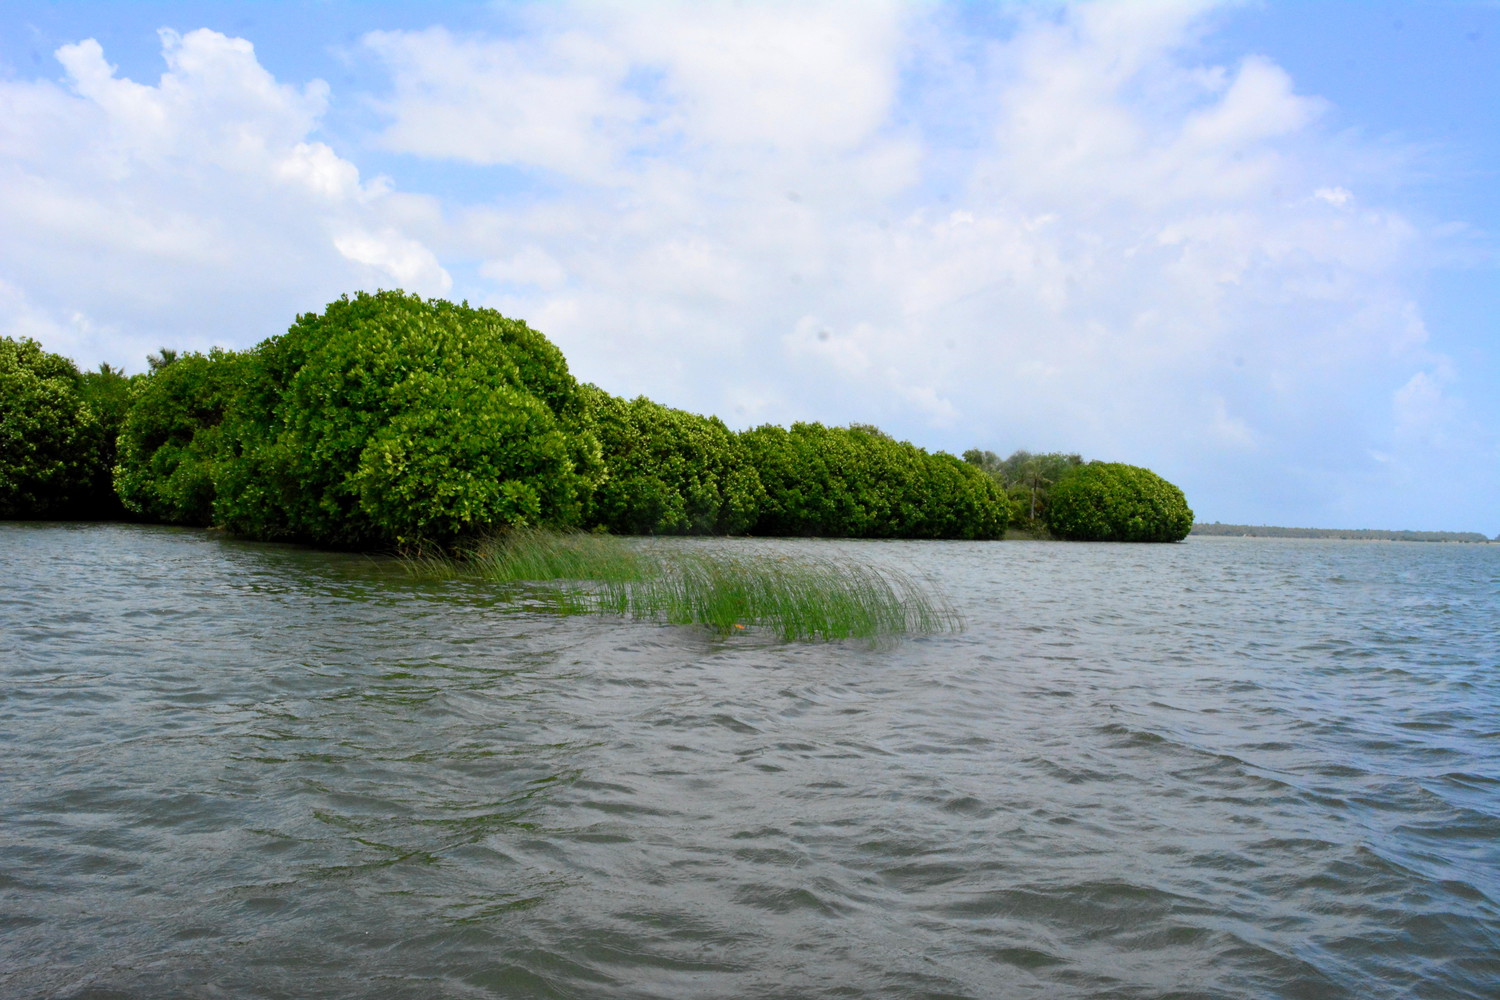 Mangroves in a lake